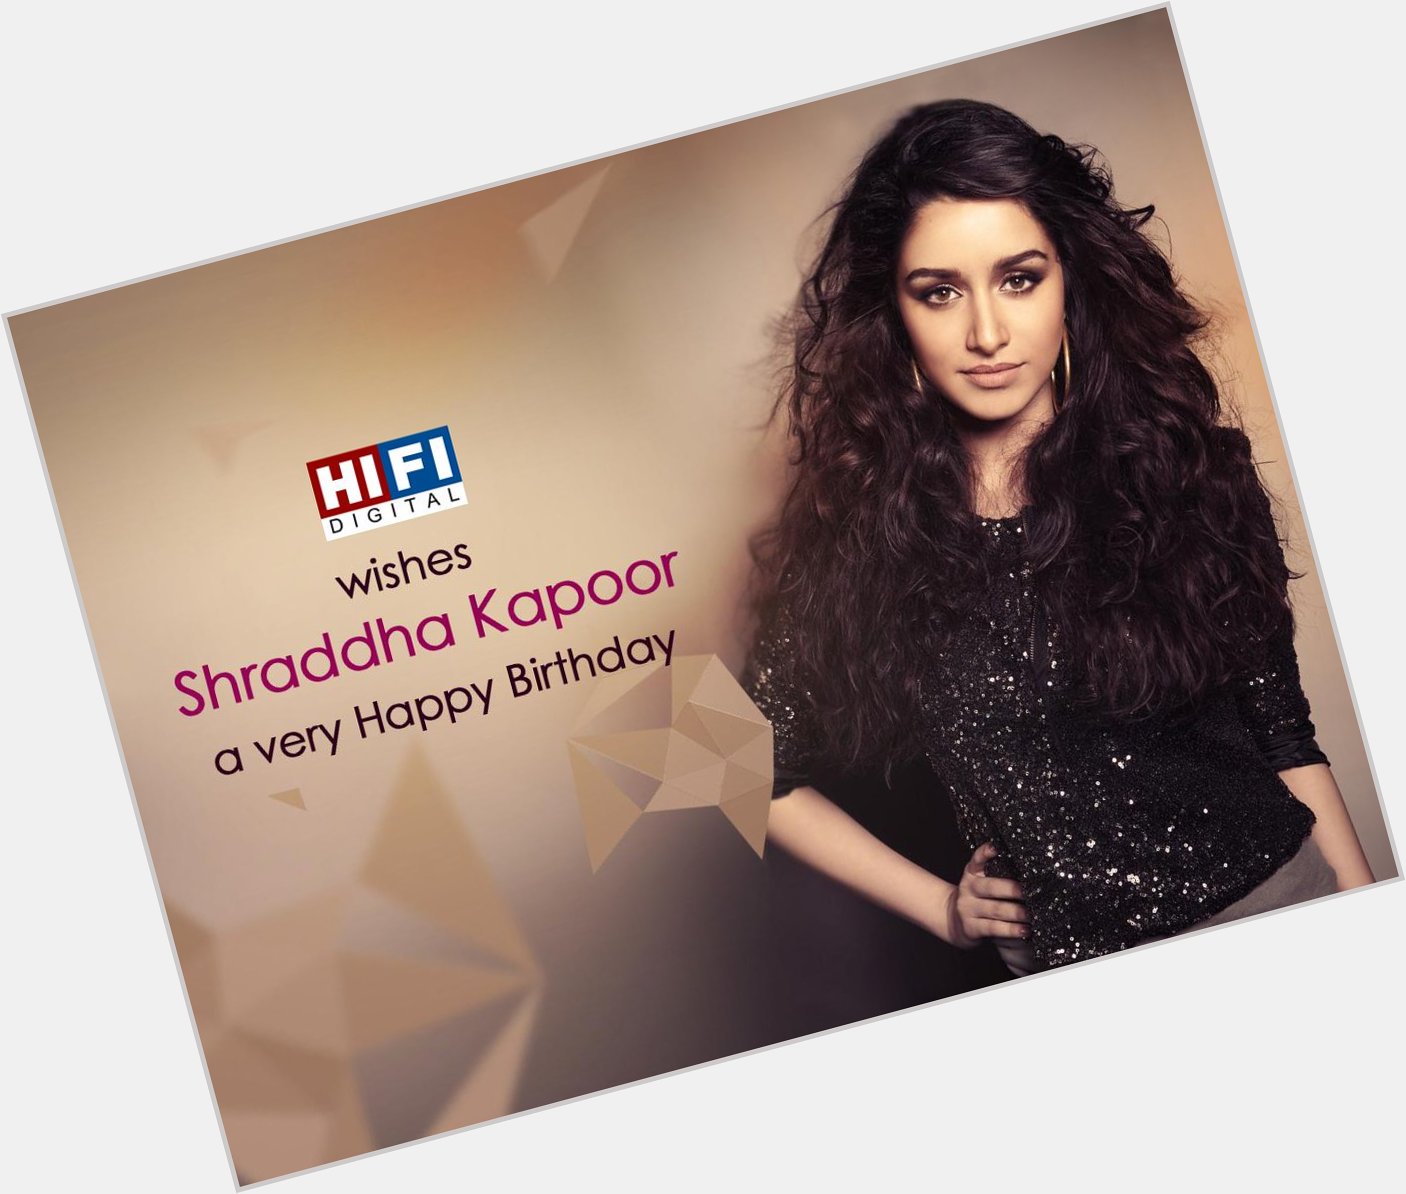 Happy Birthday Shraddha Kapoor from team HiFi Digital. 

to wish her folks :) 